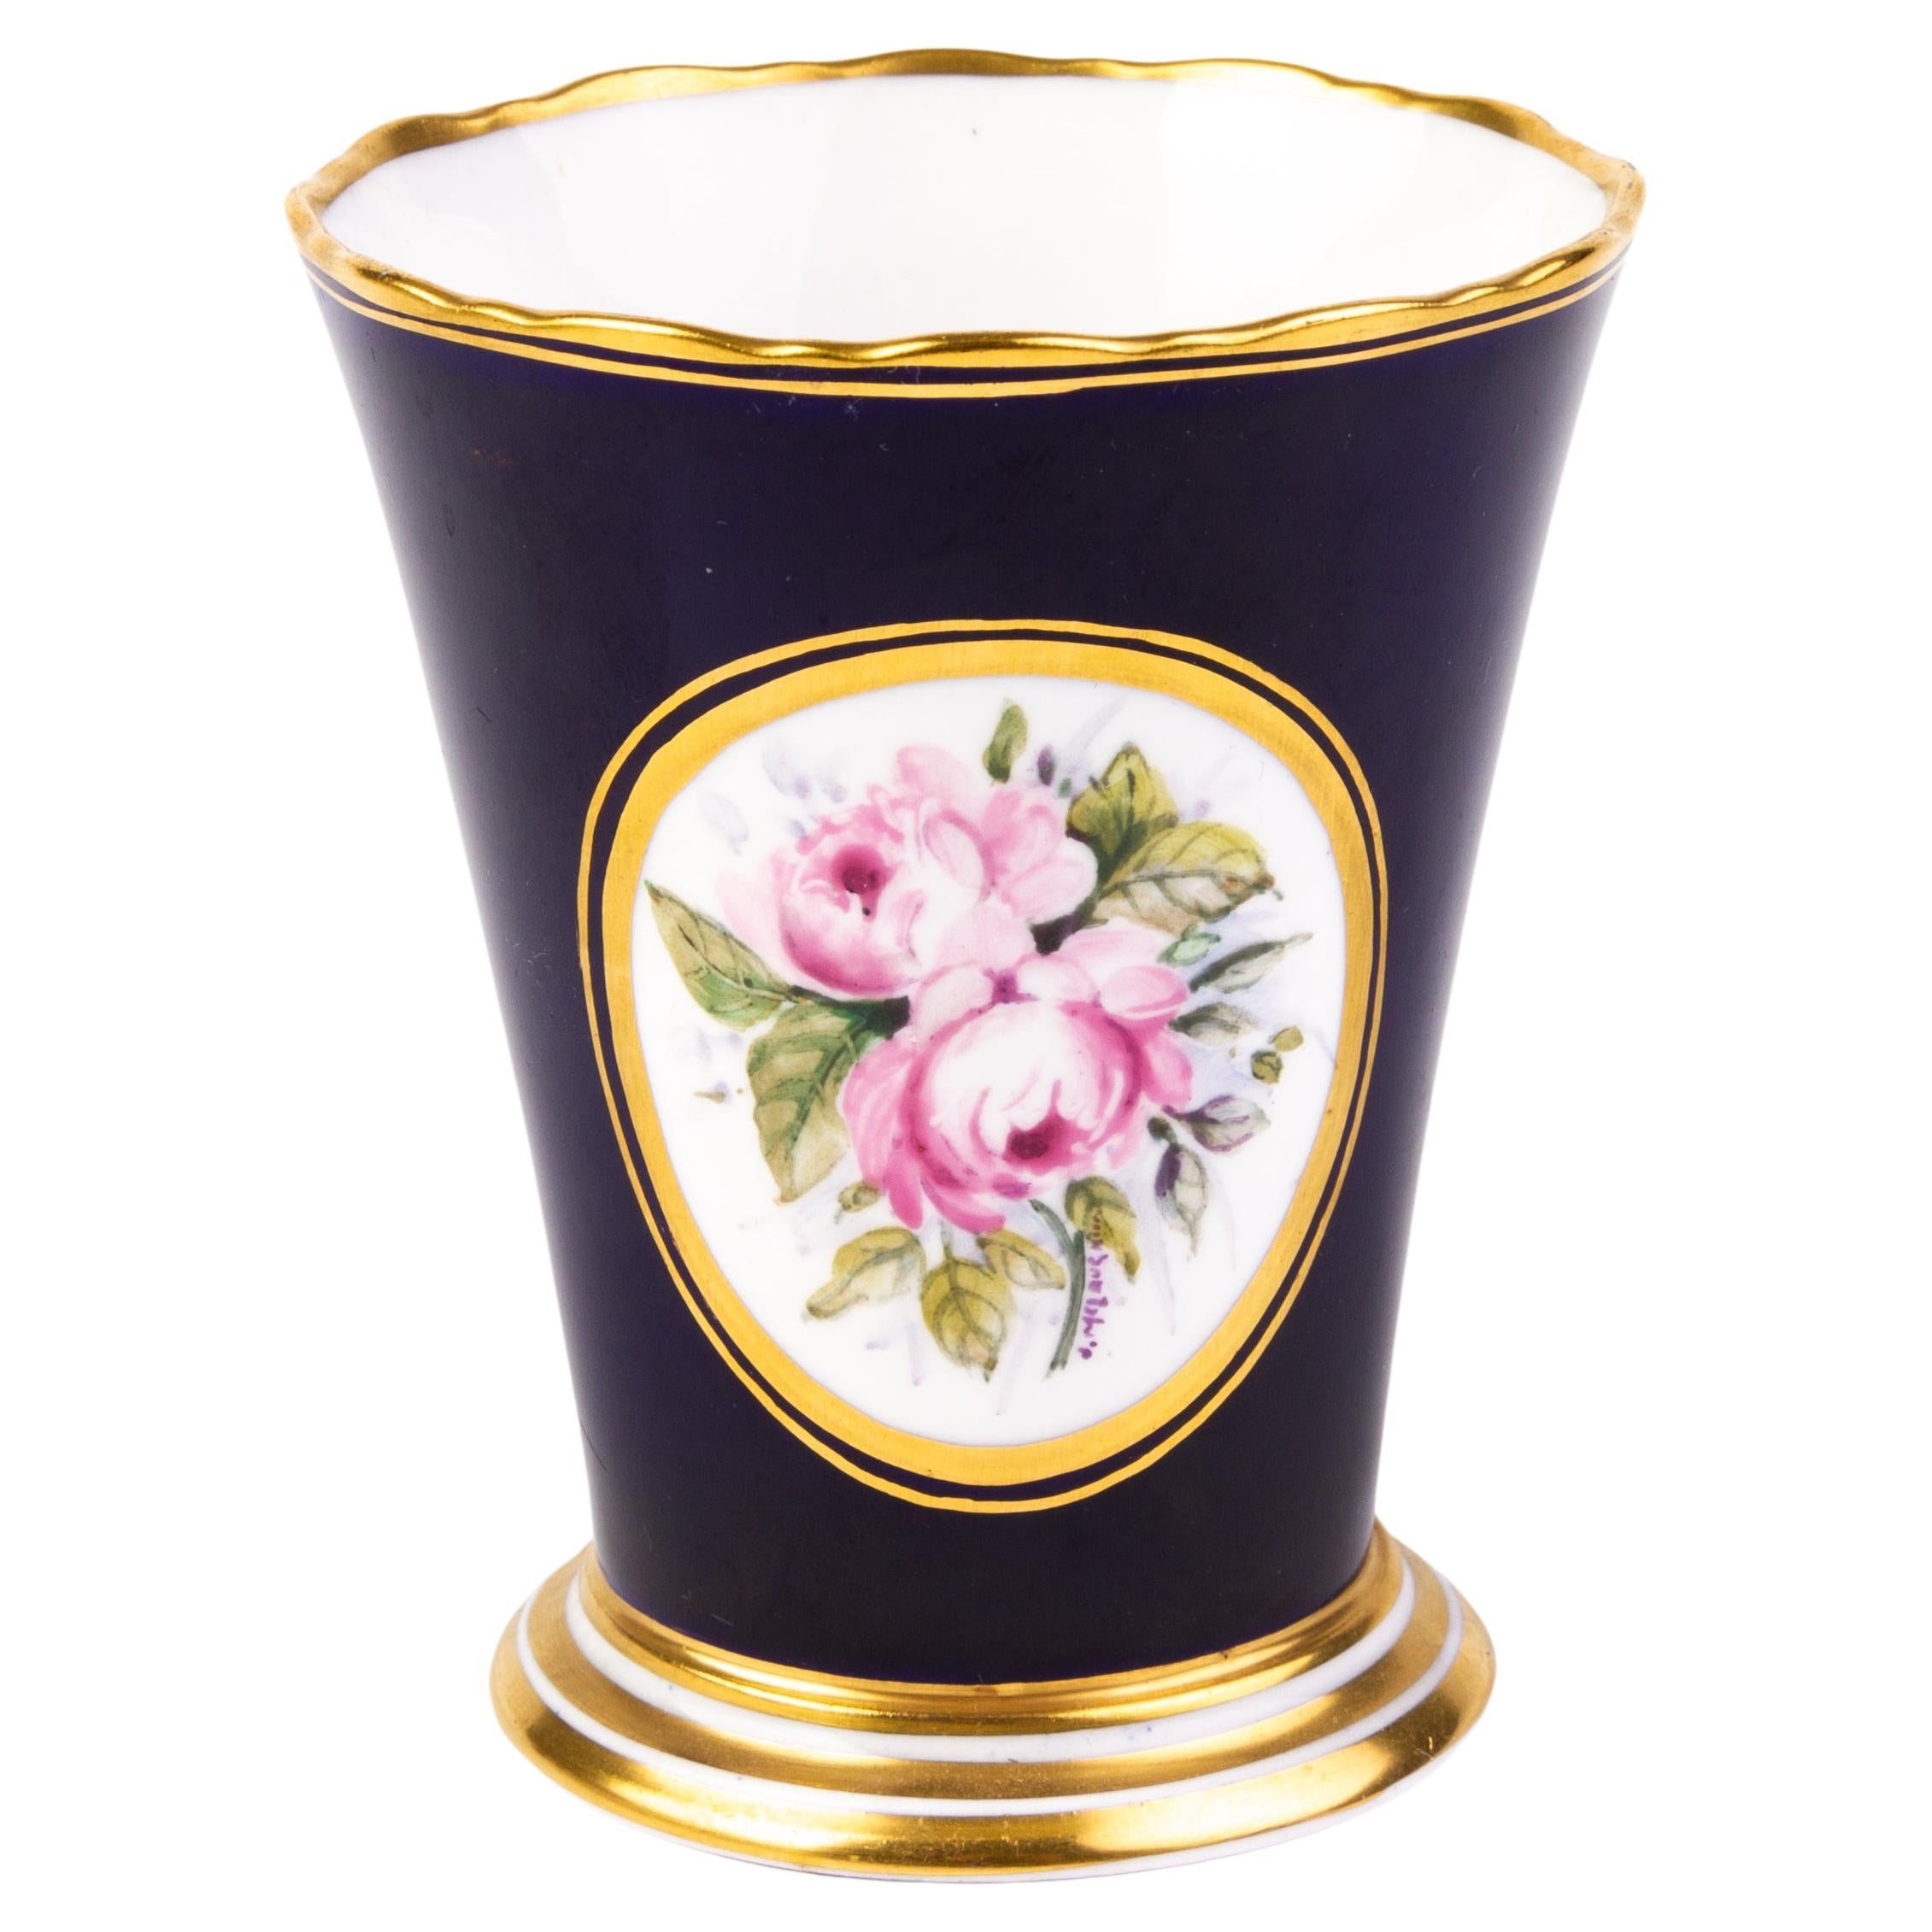 Feines vergoldetes Porzellan, kobaltfarbener Boden, florale Vase